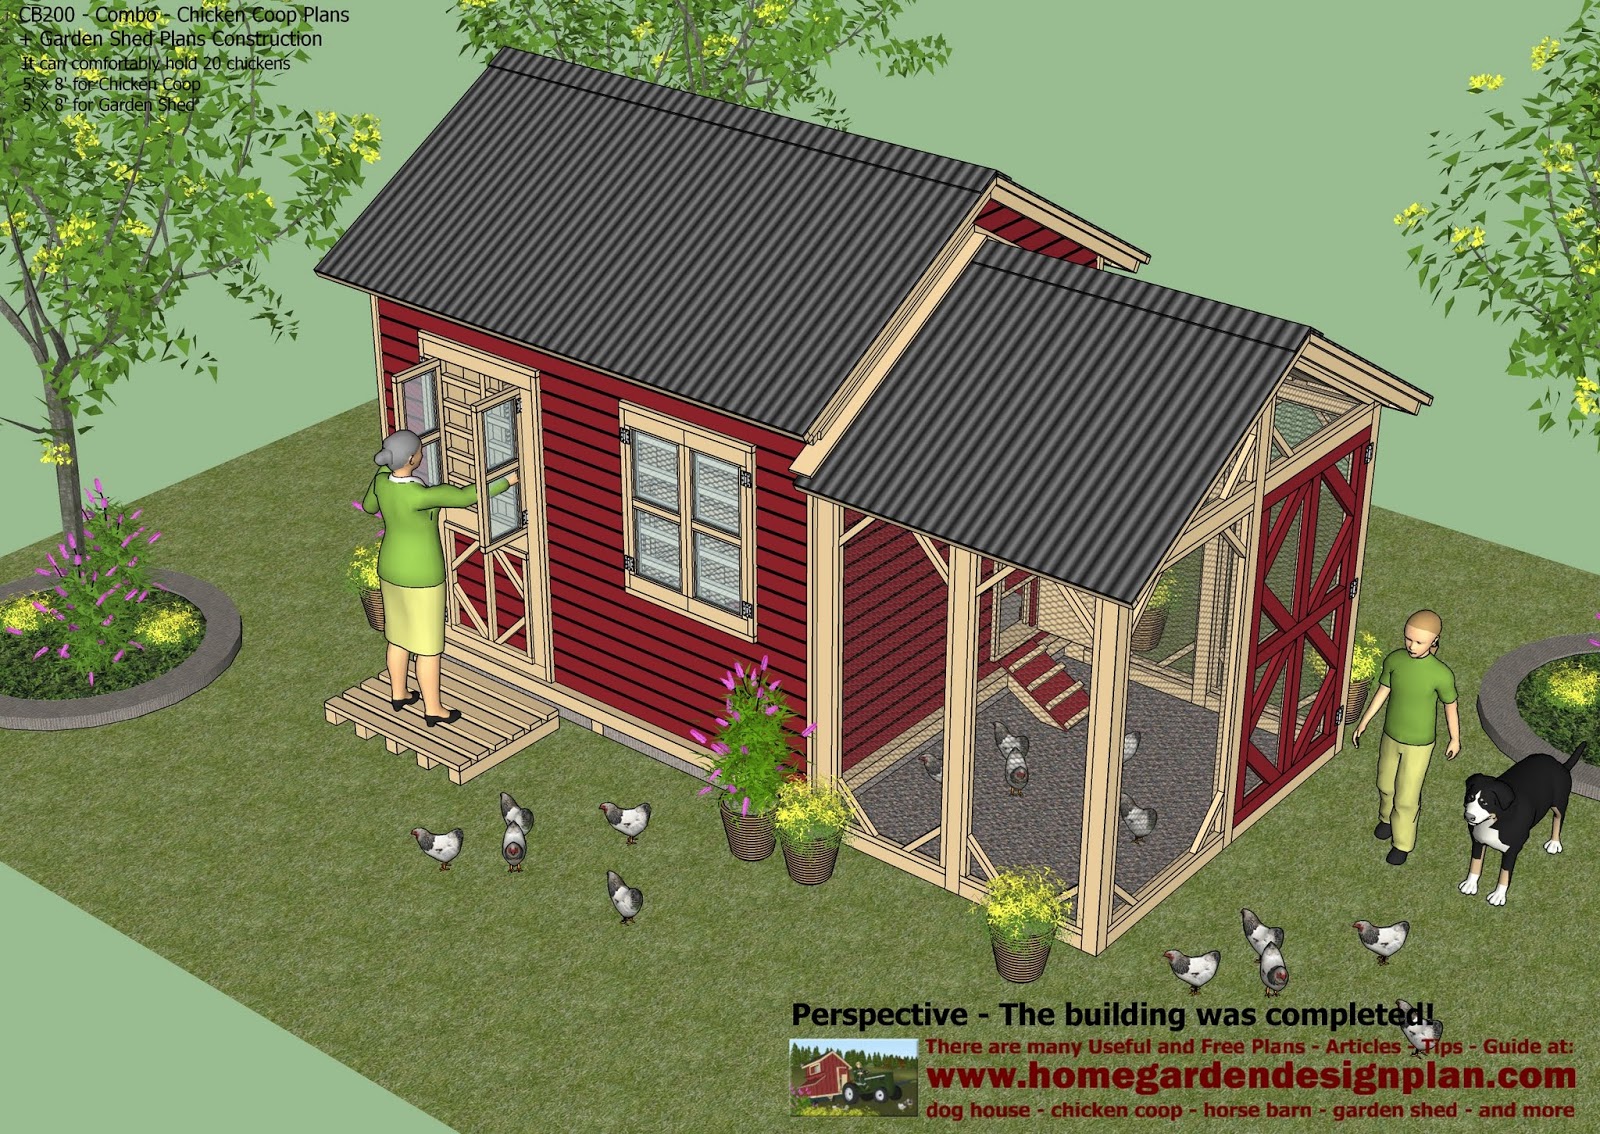 home garden plans: CB200 - Combo Plans - Chicken Coop Plans 